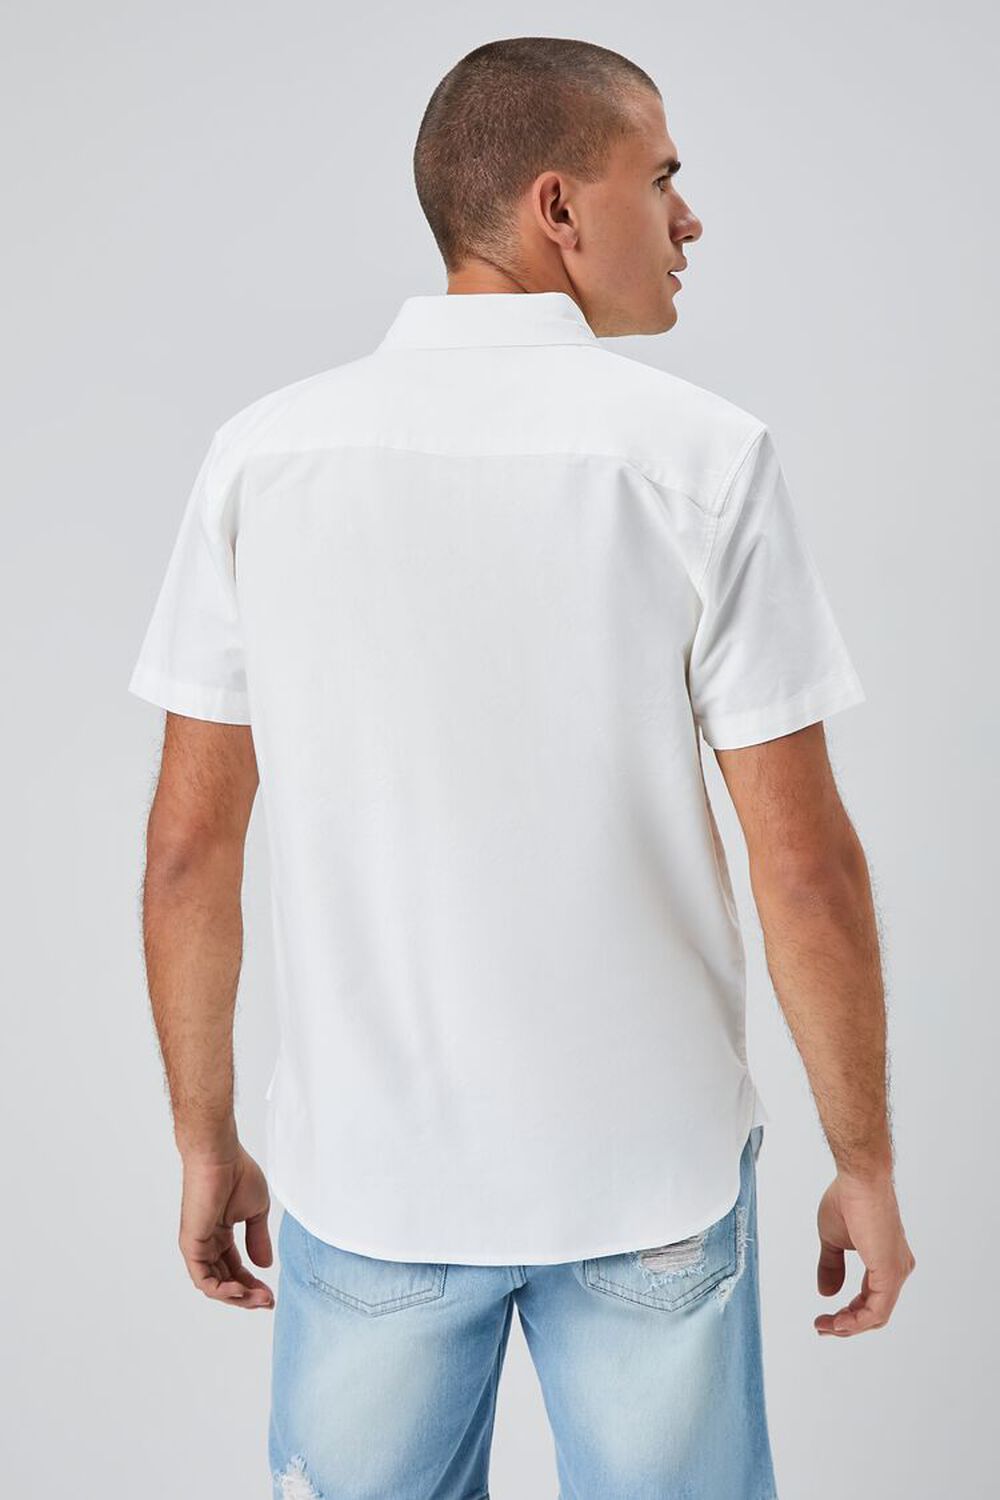 Pocket Button-Front Shirt, image 3